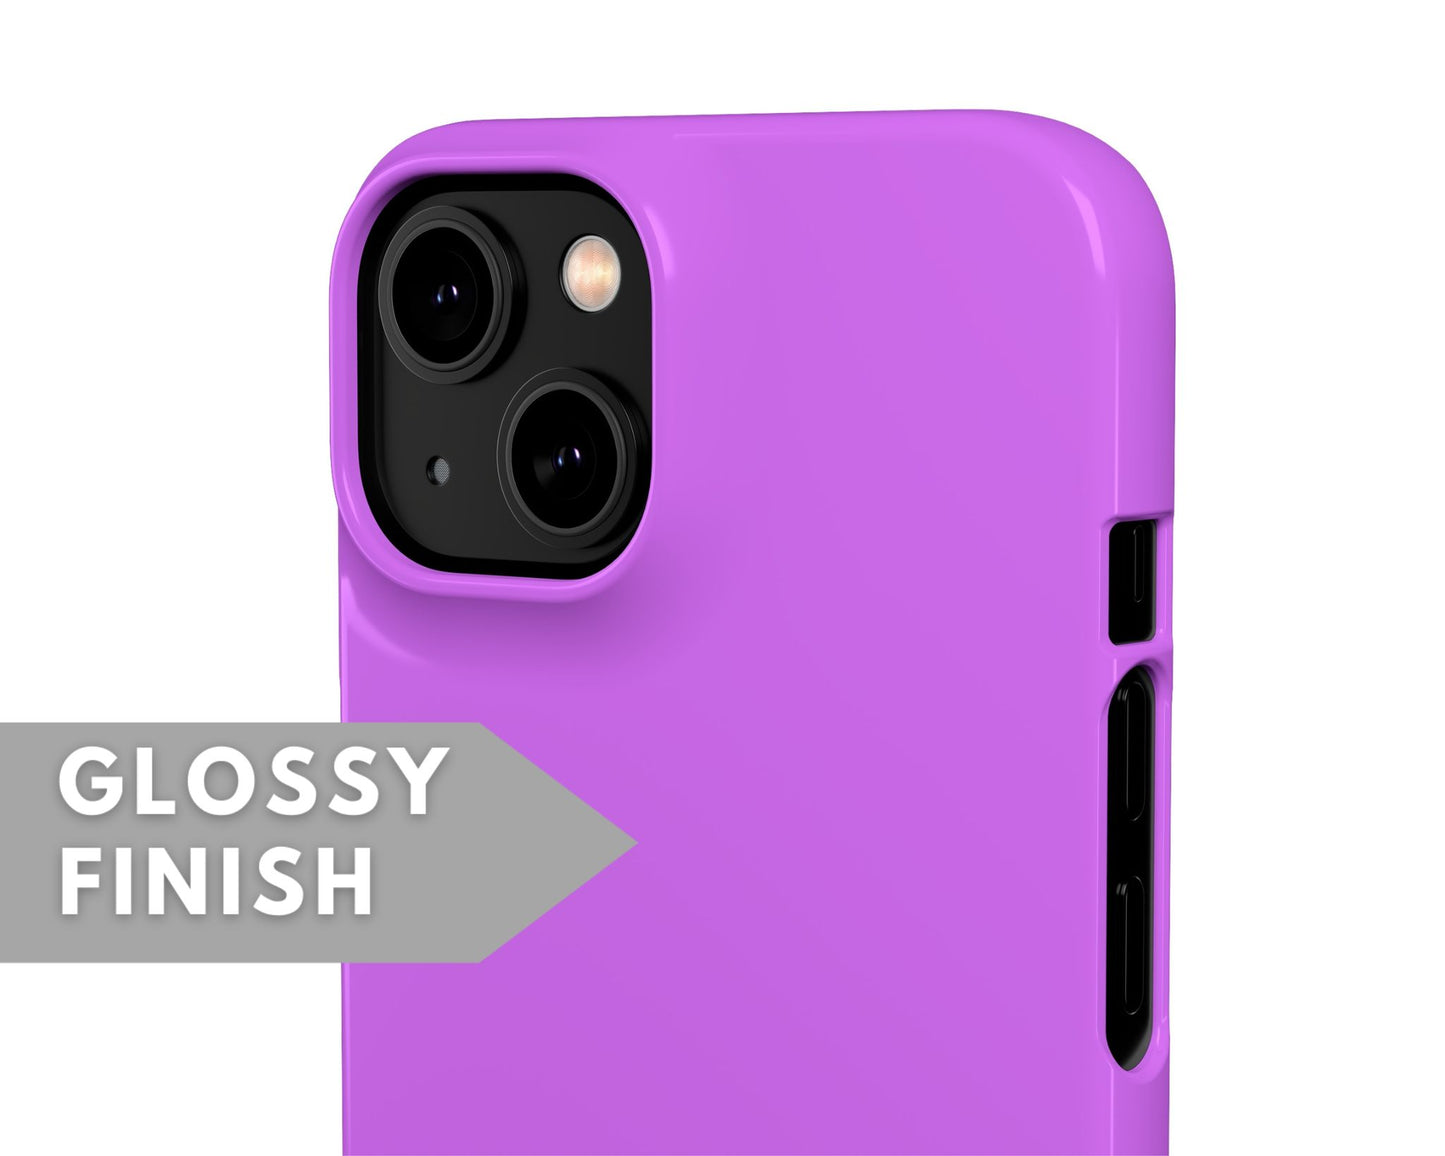 Purple Snap Case - Classy Cases